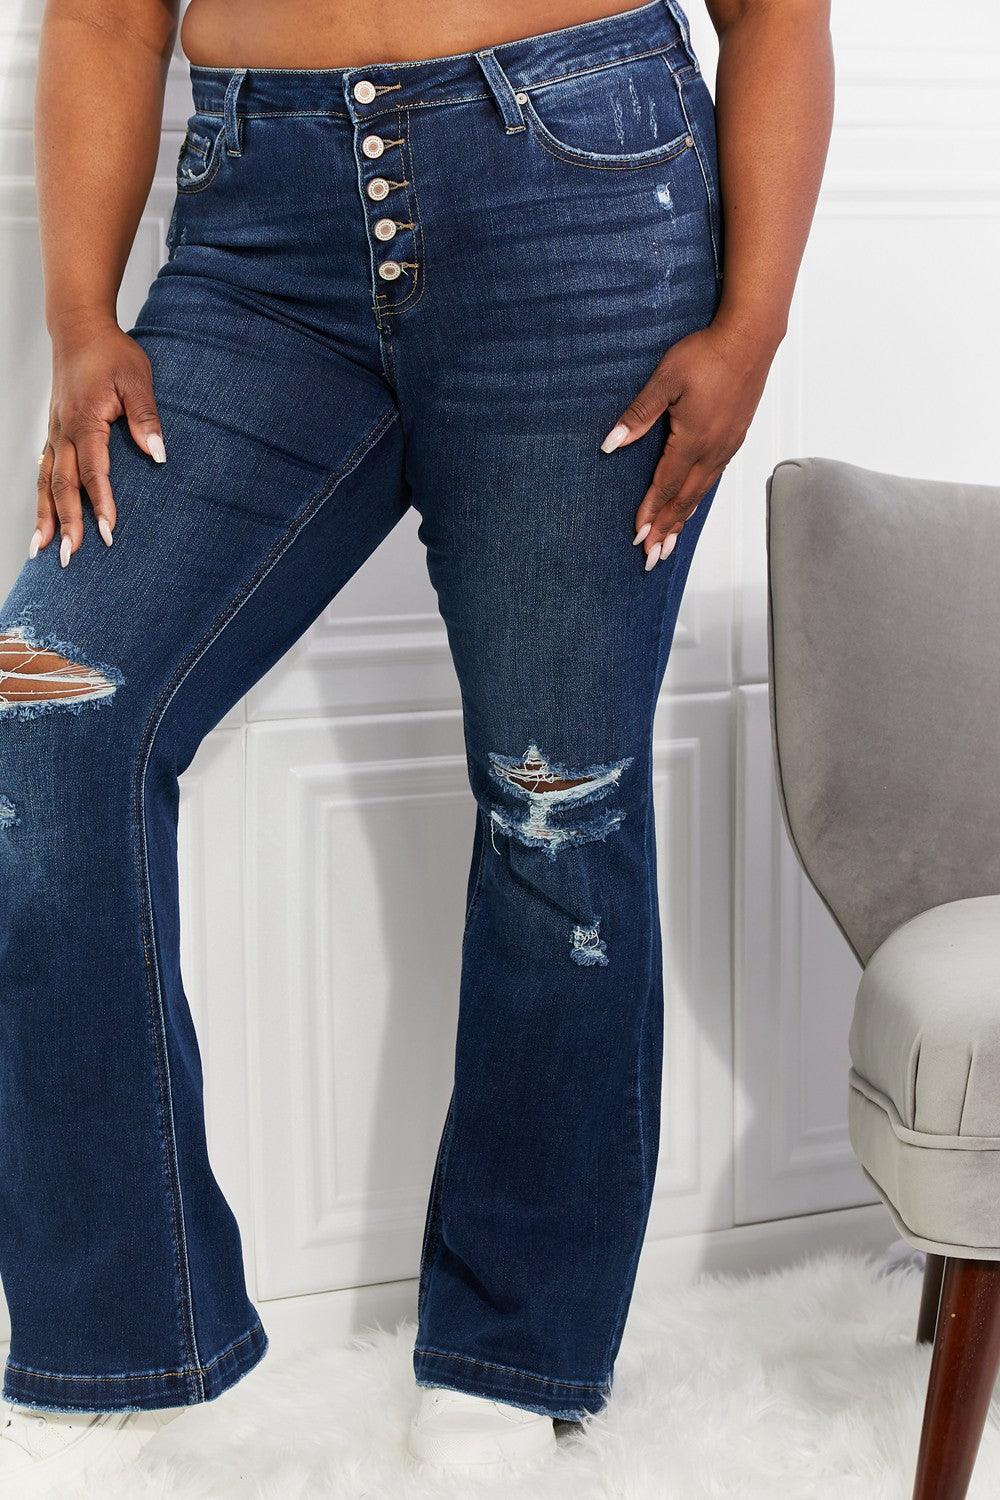 Bona Fide Fashion - Full Size Reese Midrise Button Fly Flare Jeans - Women Fashion - Bona Fide Fashion